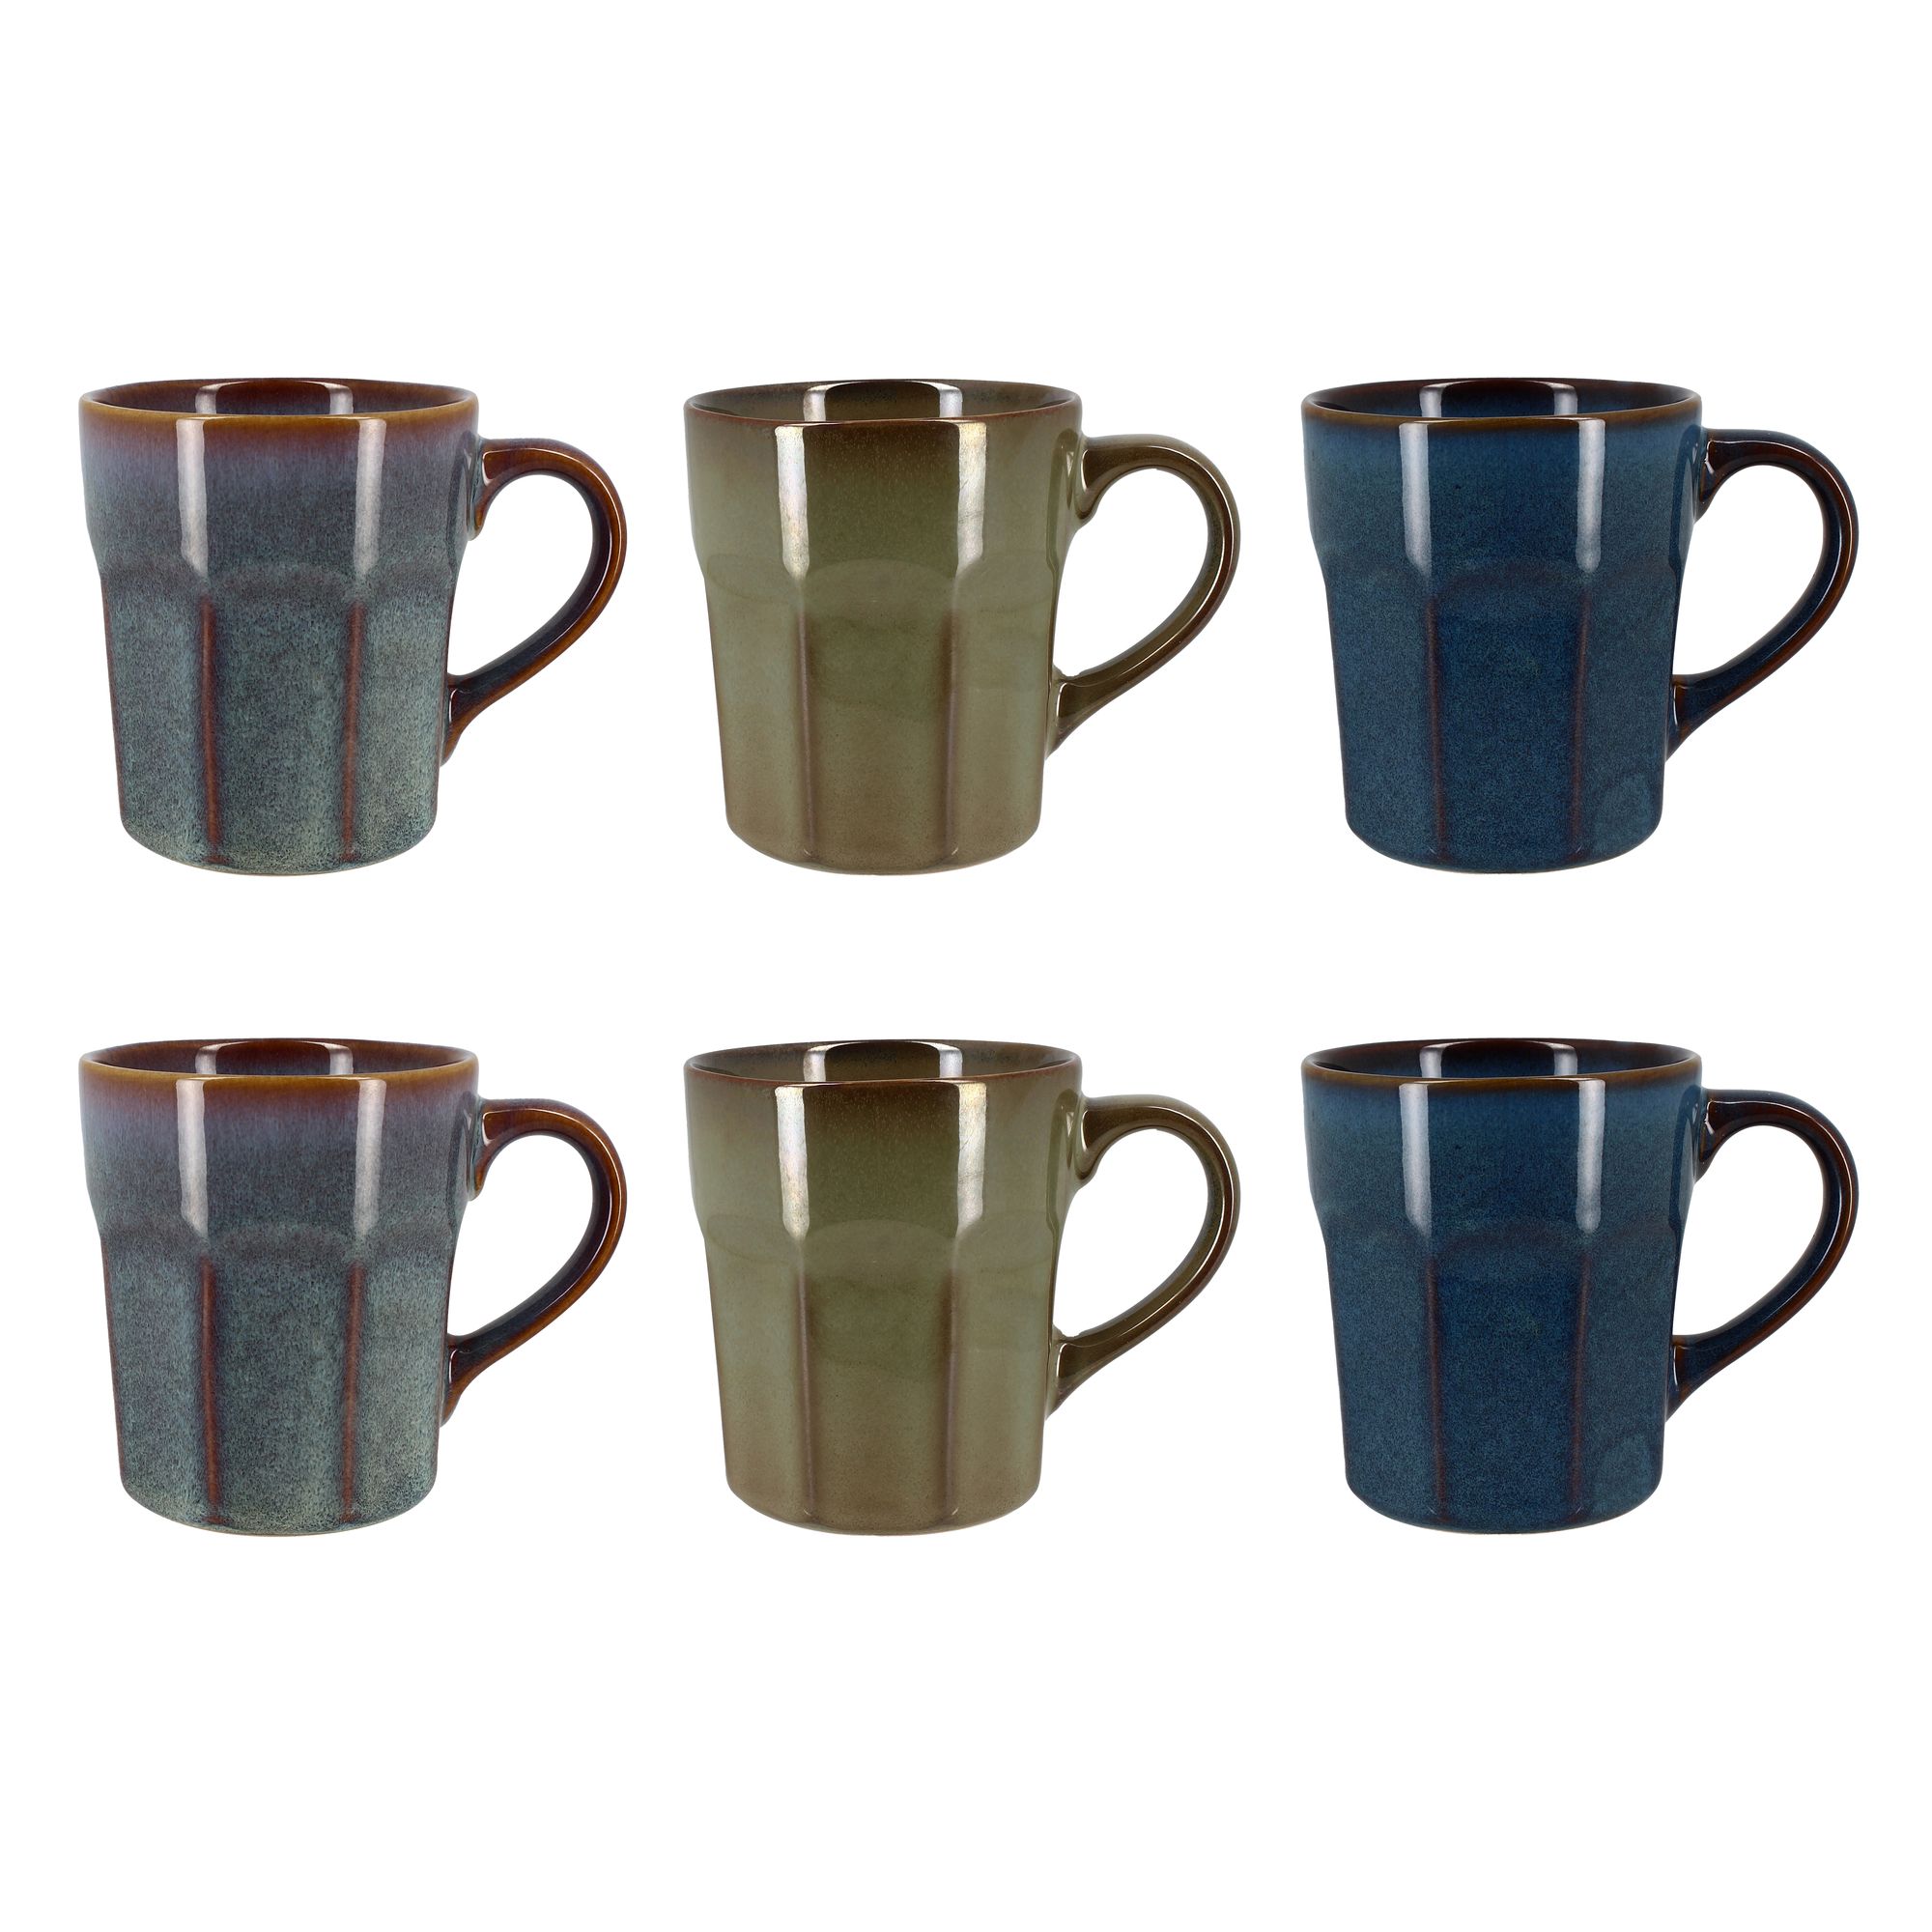 lot de 6 mugs en grès - 3 couleurs assorties 28cl